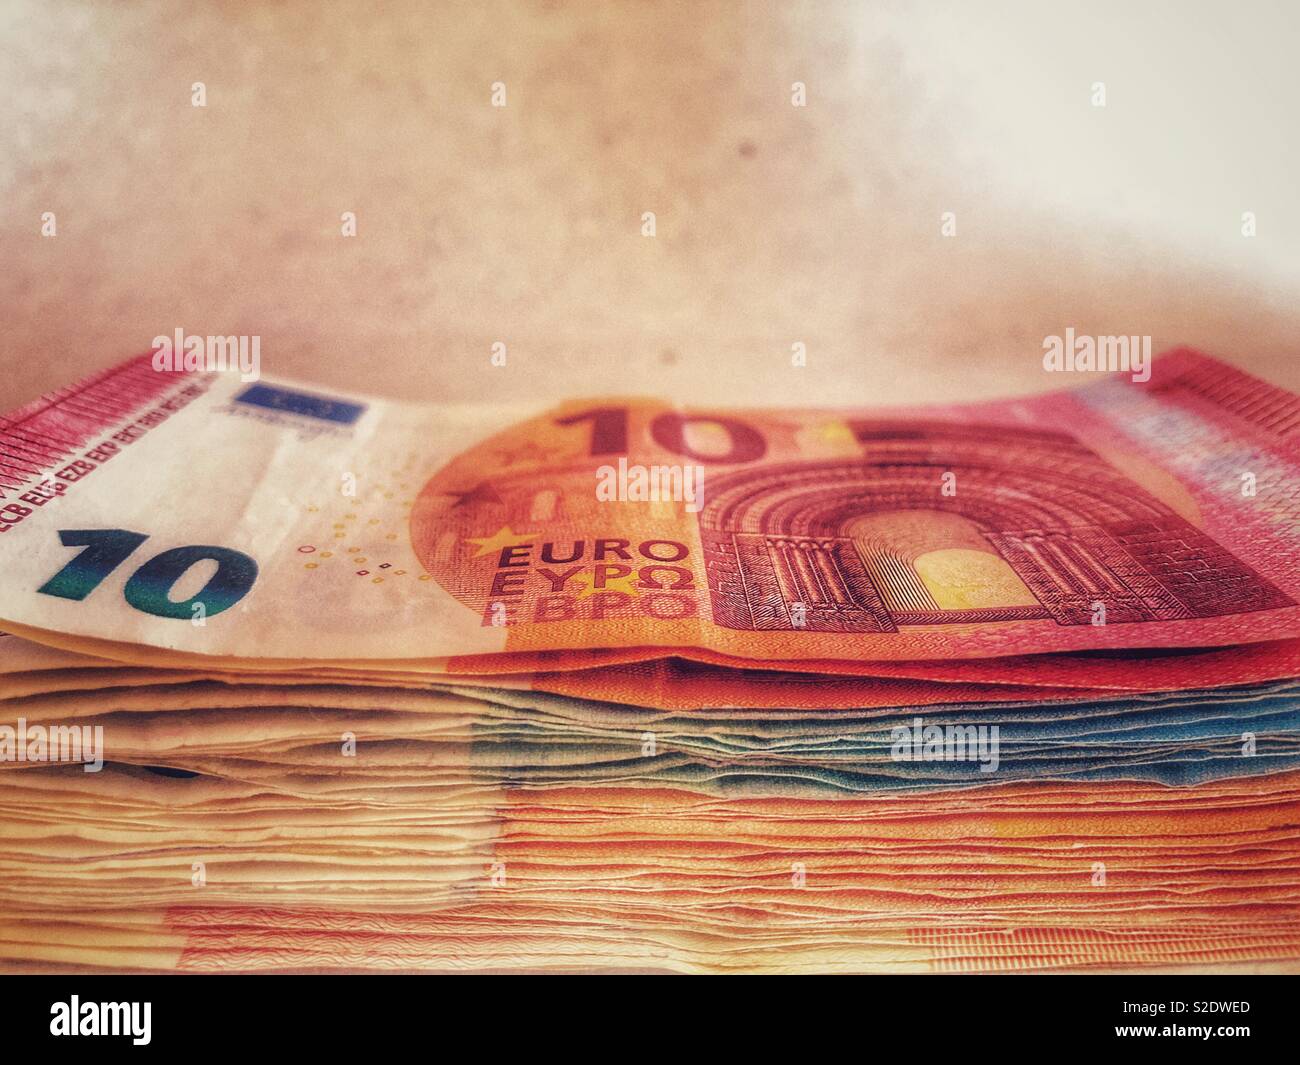 Pile of Euro banknotes Stock Photo